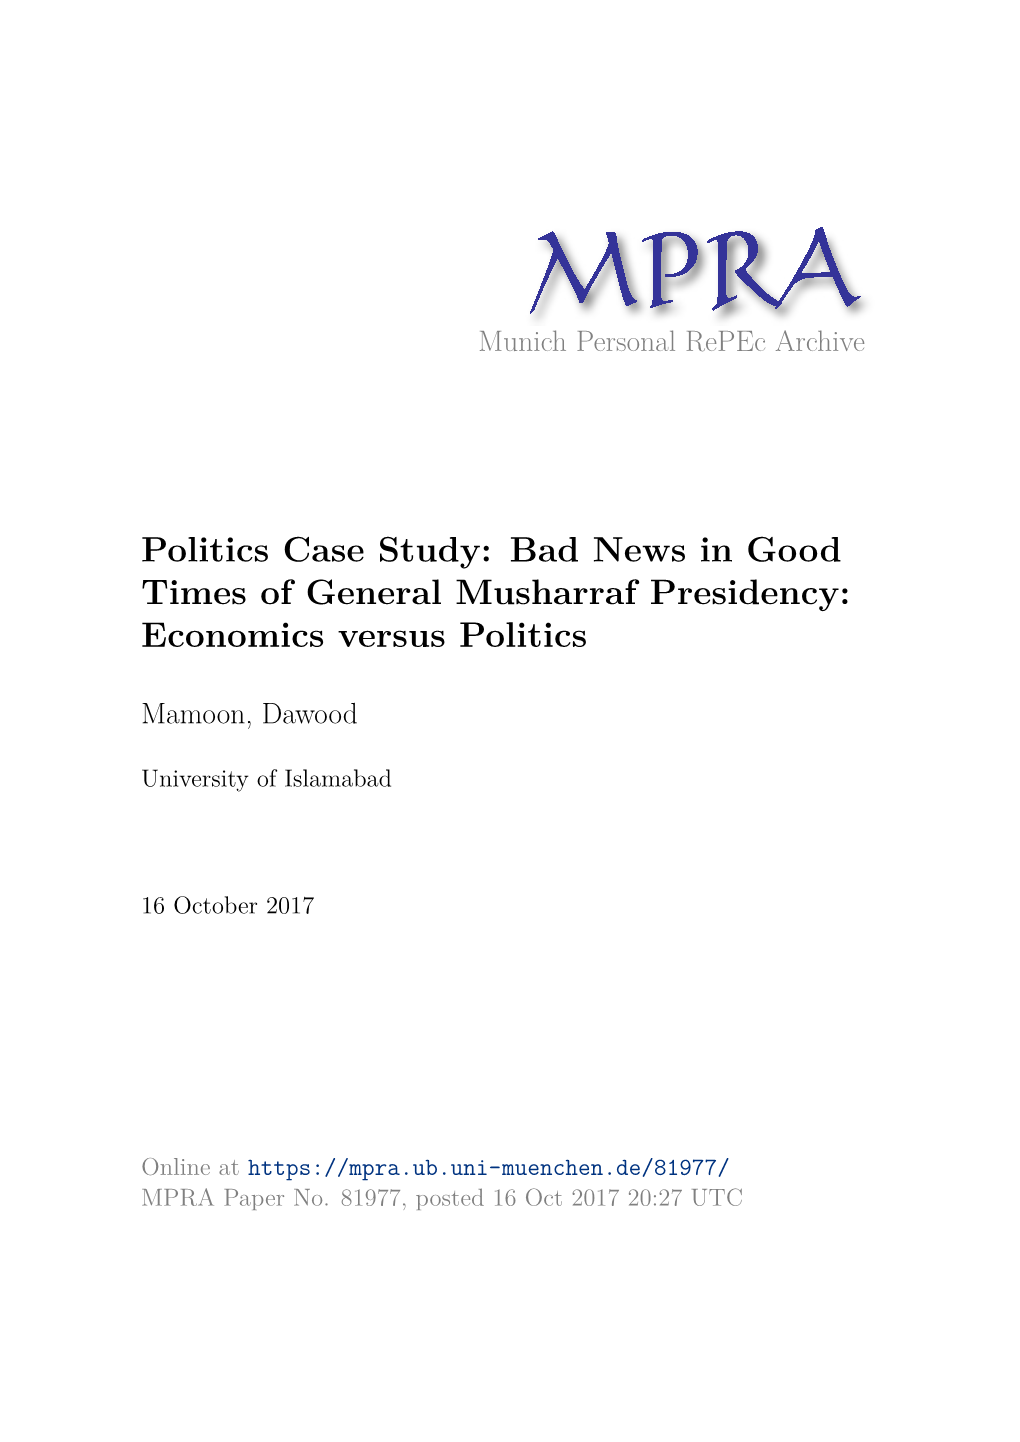 Politics Case Study: Bad News in Good Times of General Musharraf Presidency: Economics Versus Politics